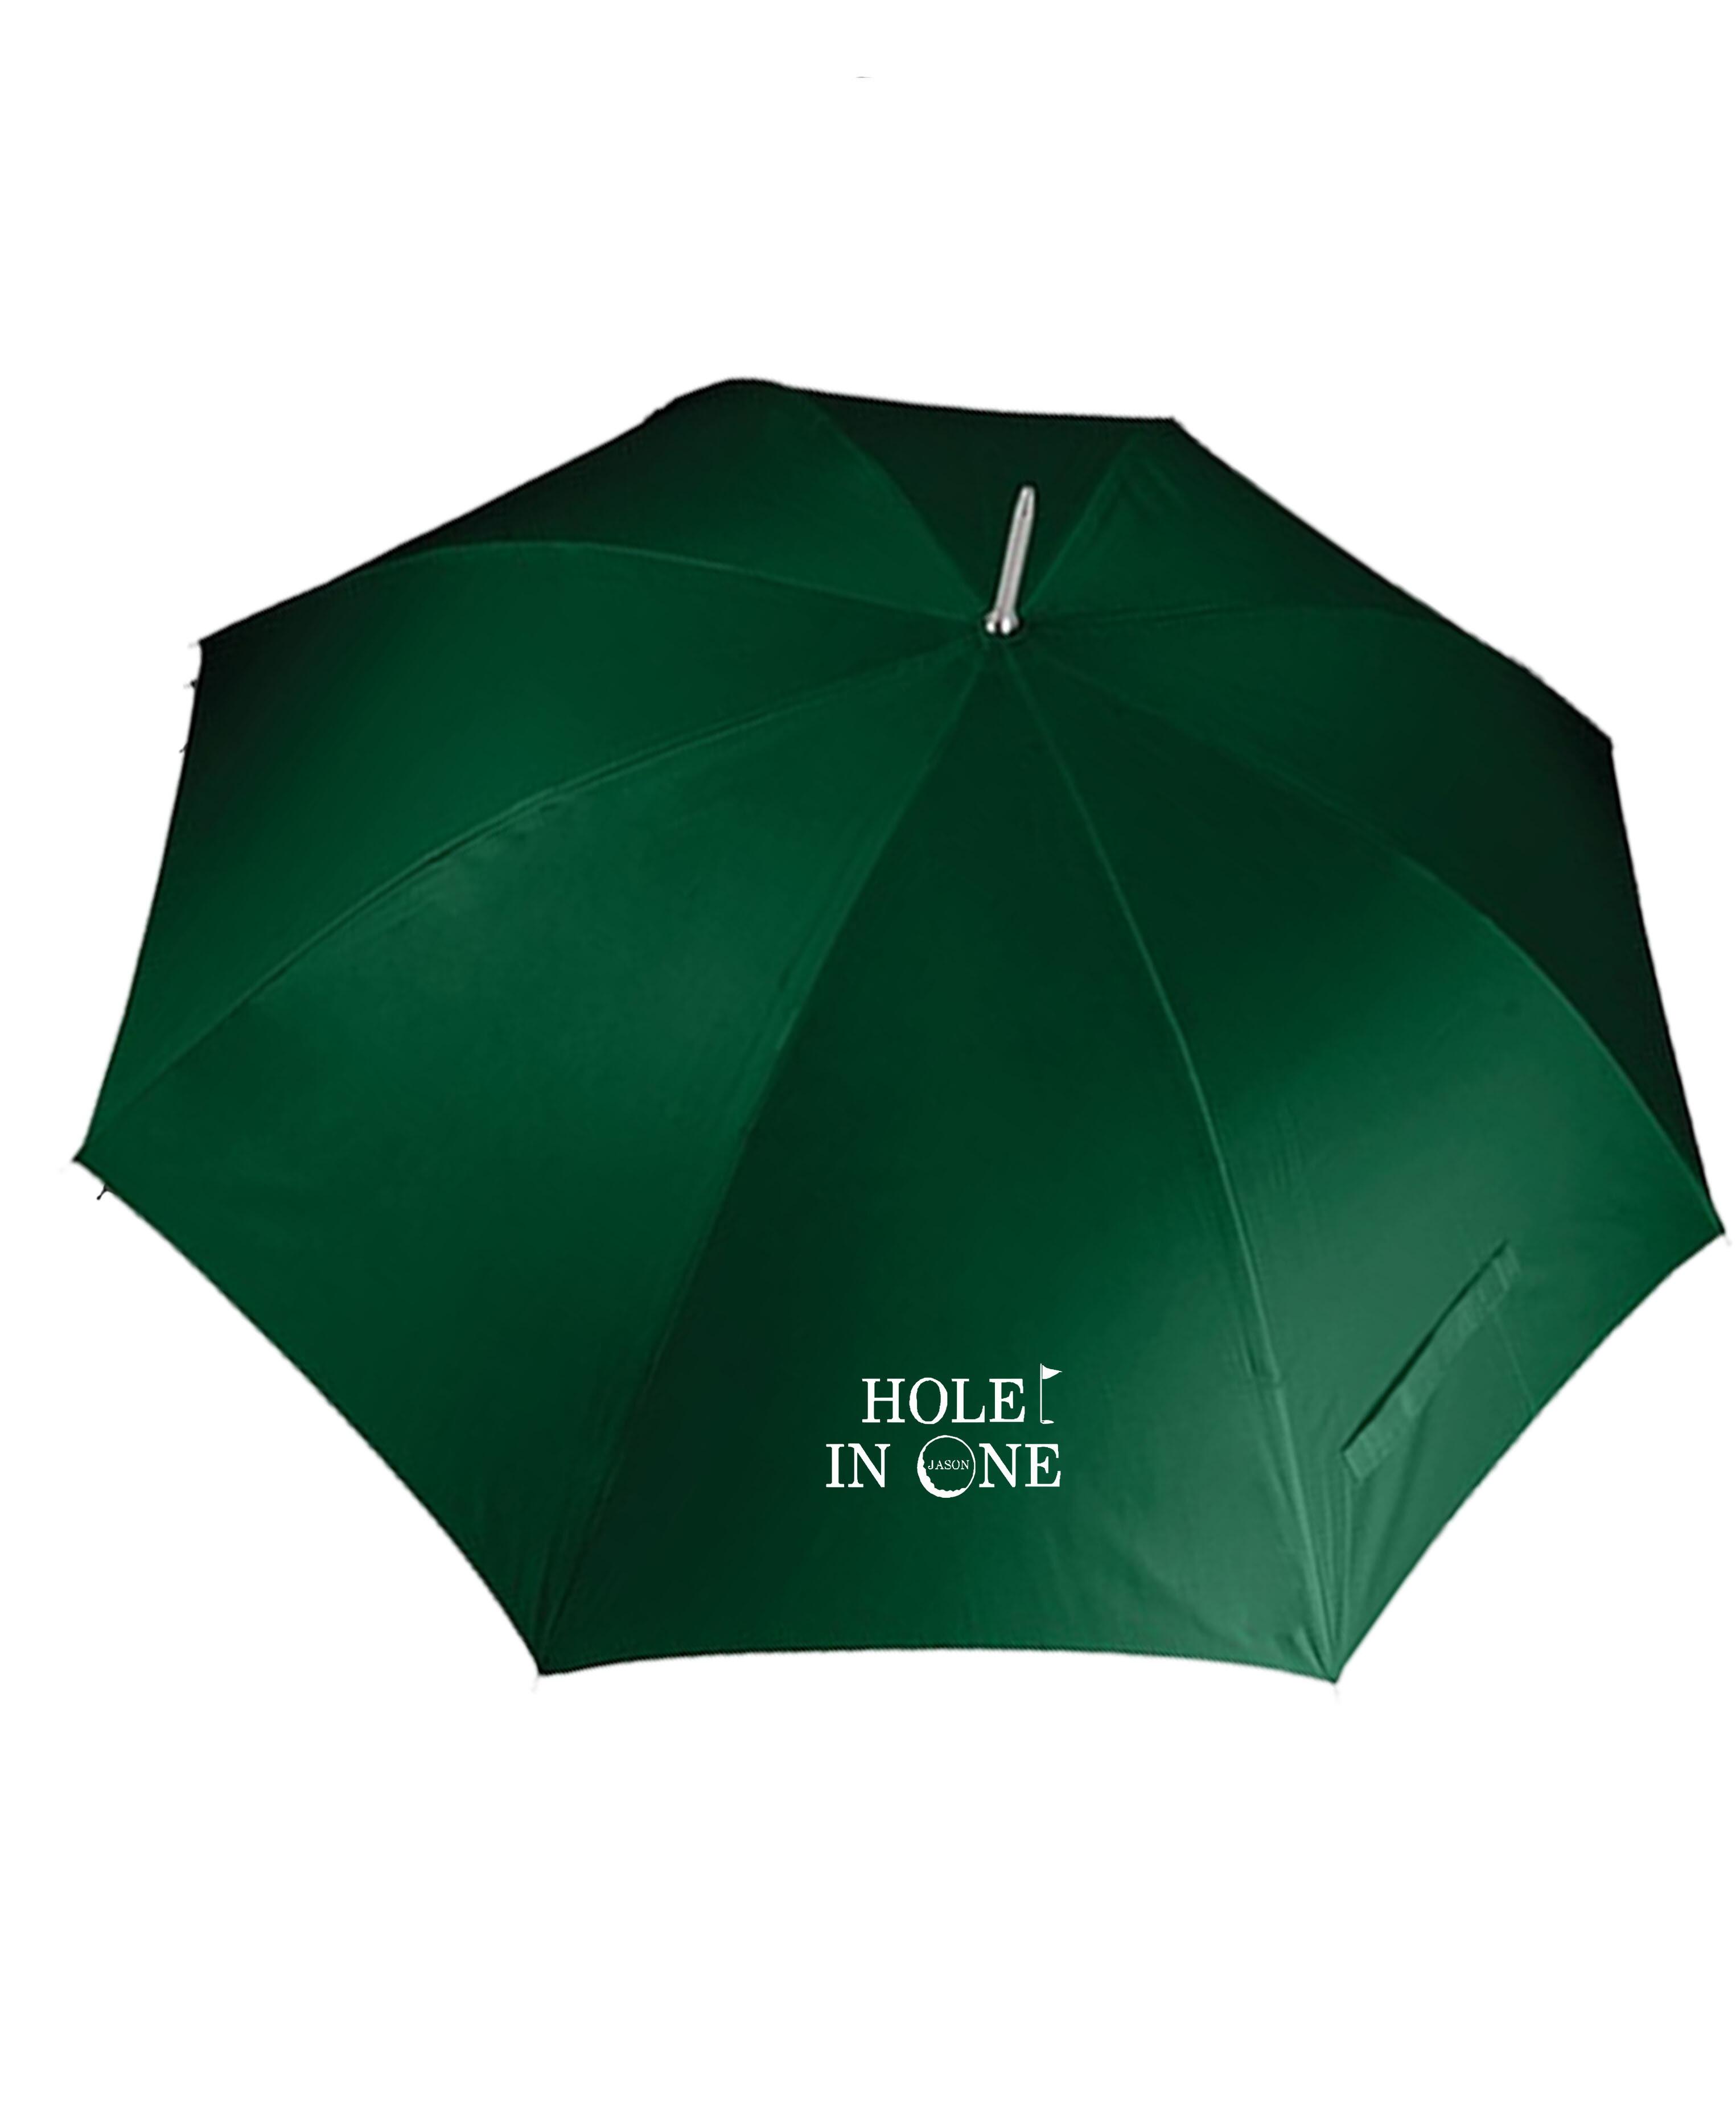 Hole in 1 Design X-Large Golf Umbrella Bottle Green